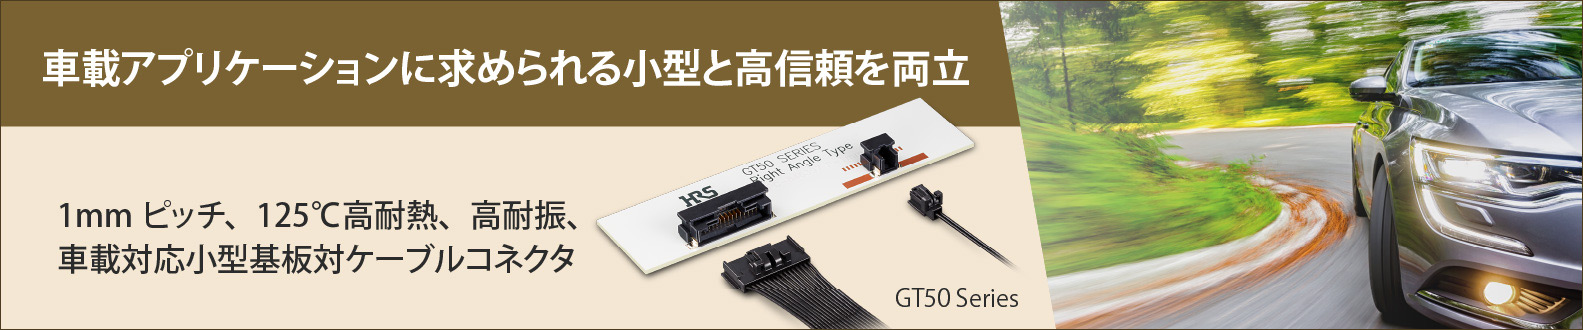 JP_GT50_Banner.jpg